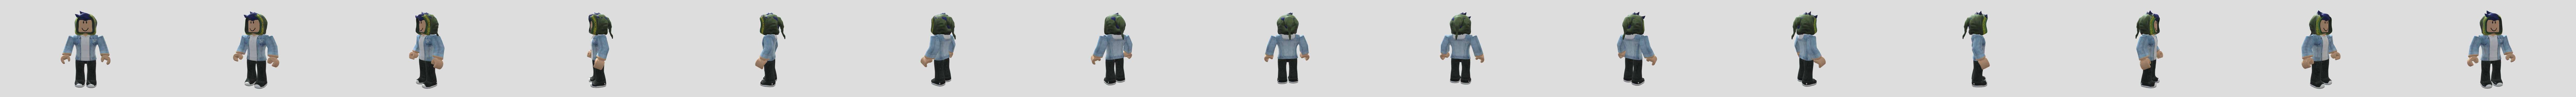 Roblox Avatar - 3D model by anghelutatarek (@anghelutatarek) [d201af2]